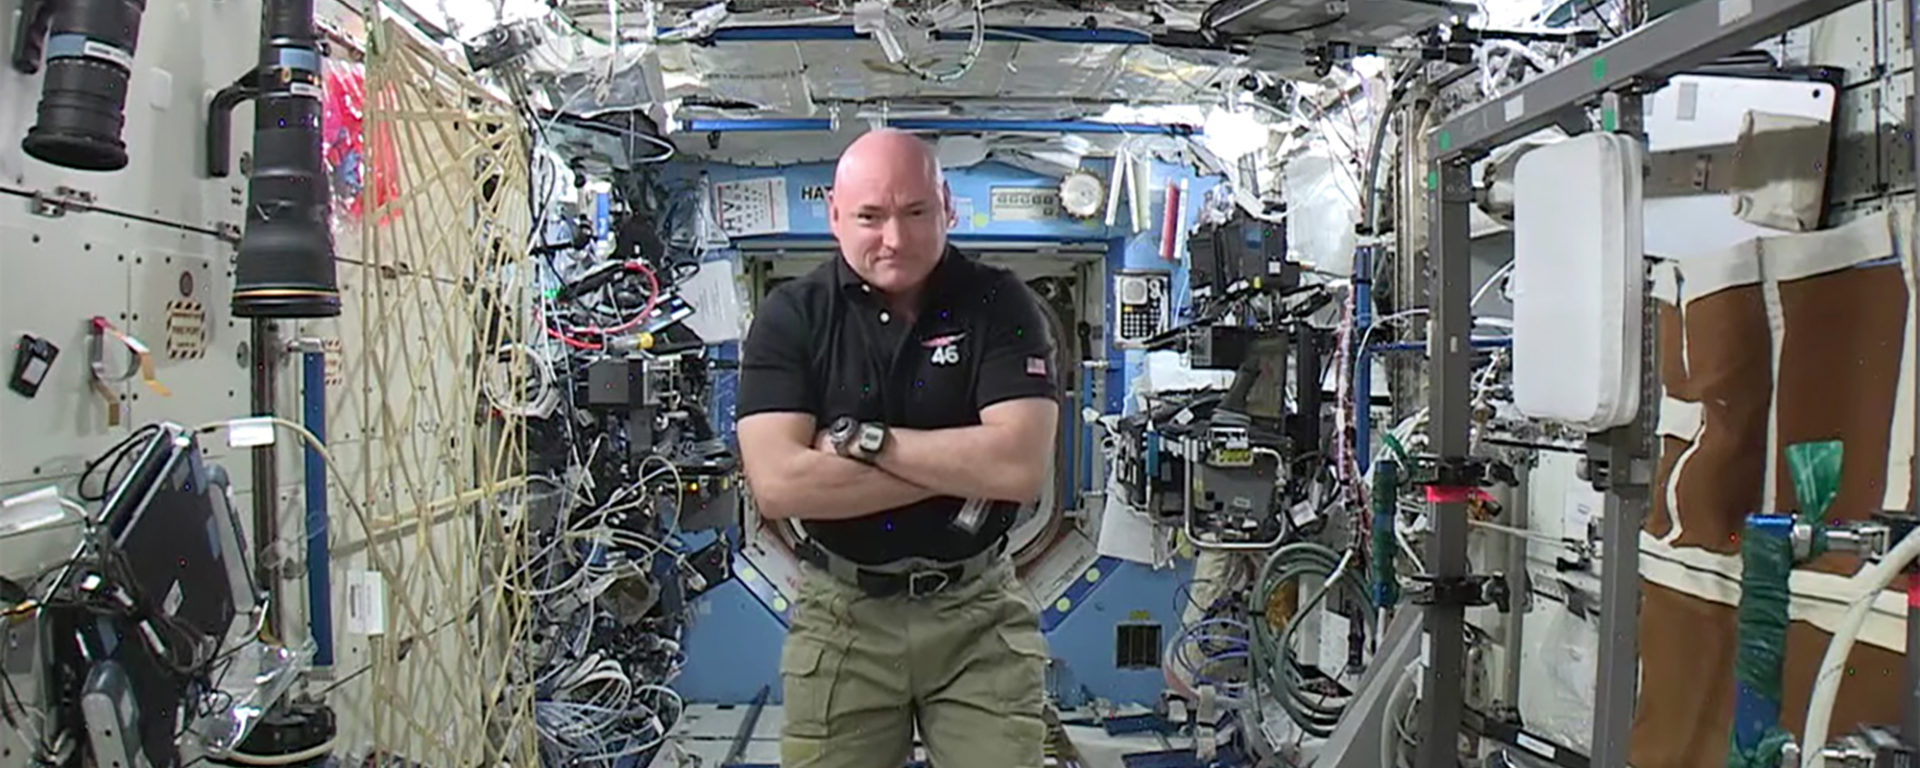 Scott Kelly aboard the International Space Station